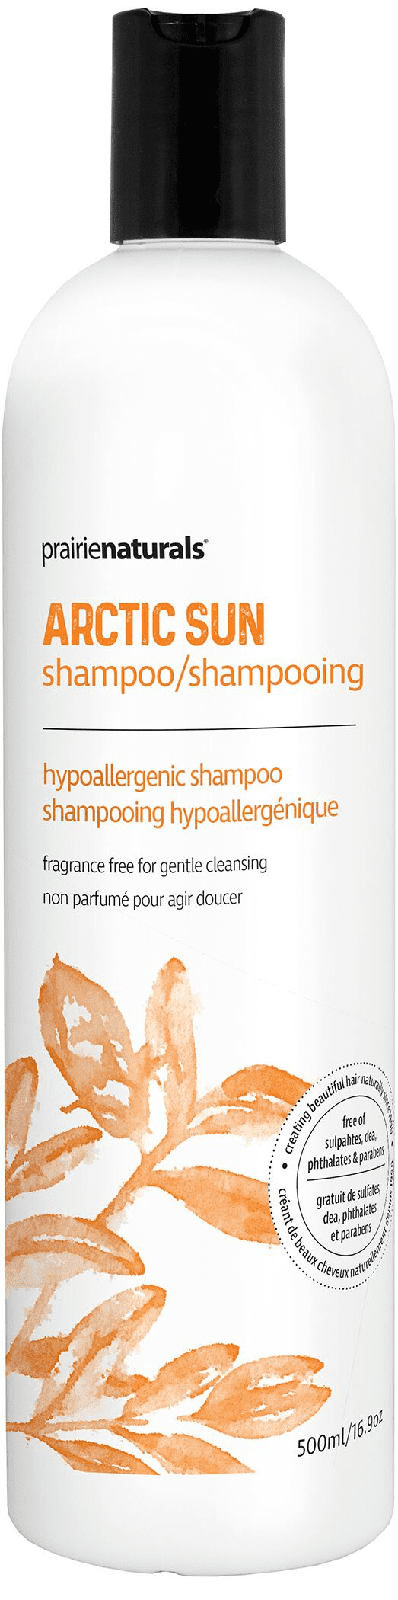 Prairie Naturals Arctic Sun Hypoallergenic Shampoo 500 mL Image 2